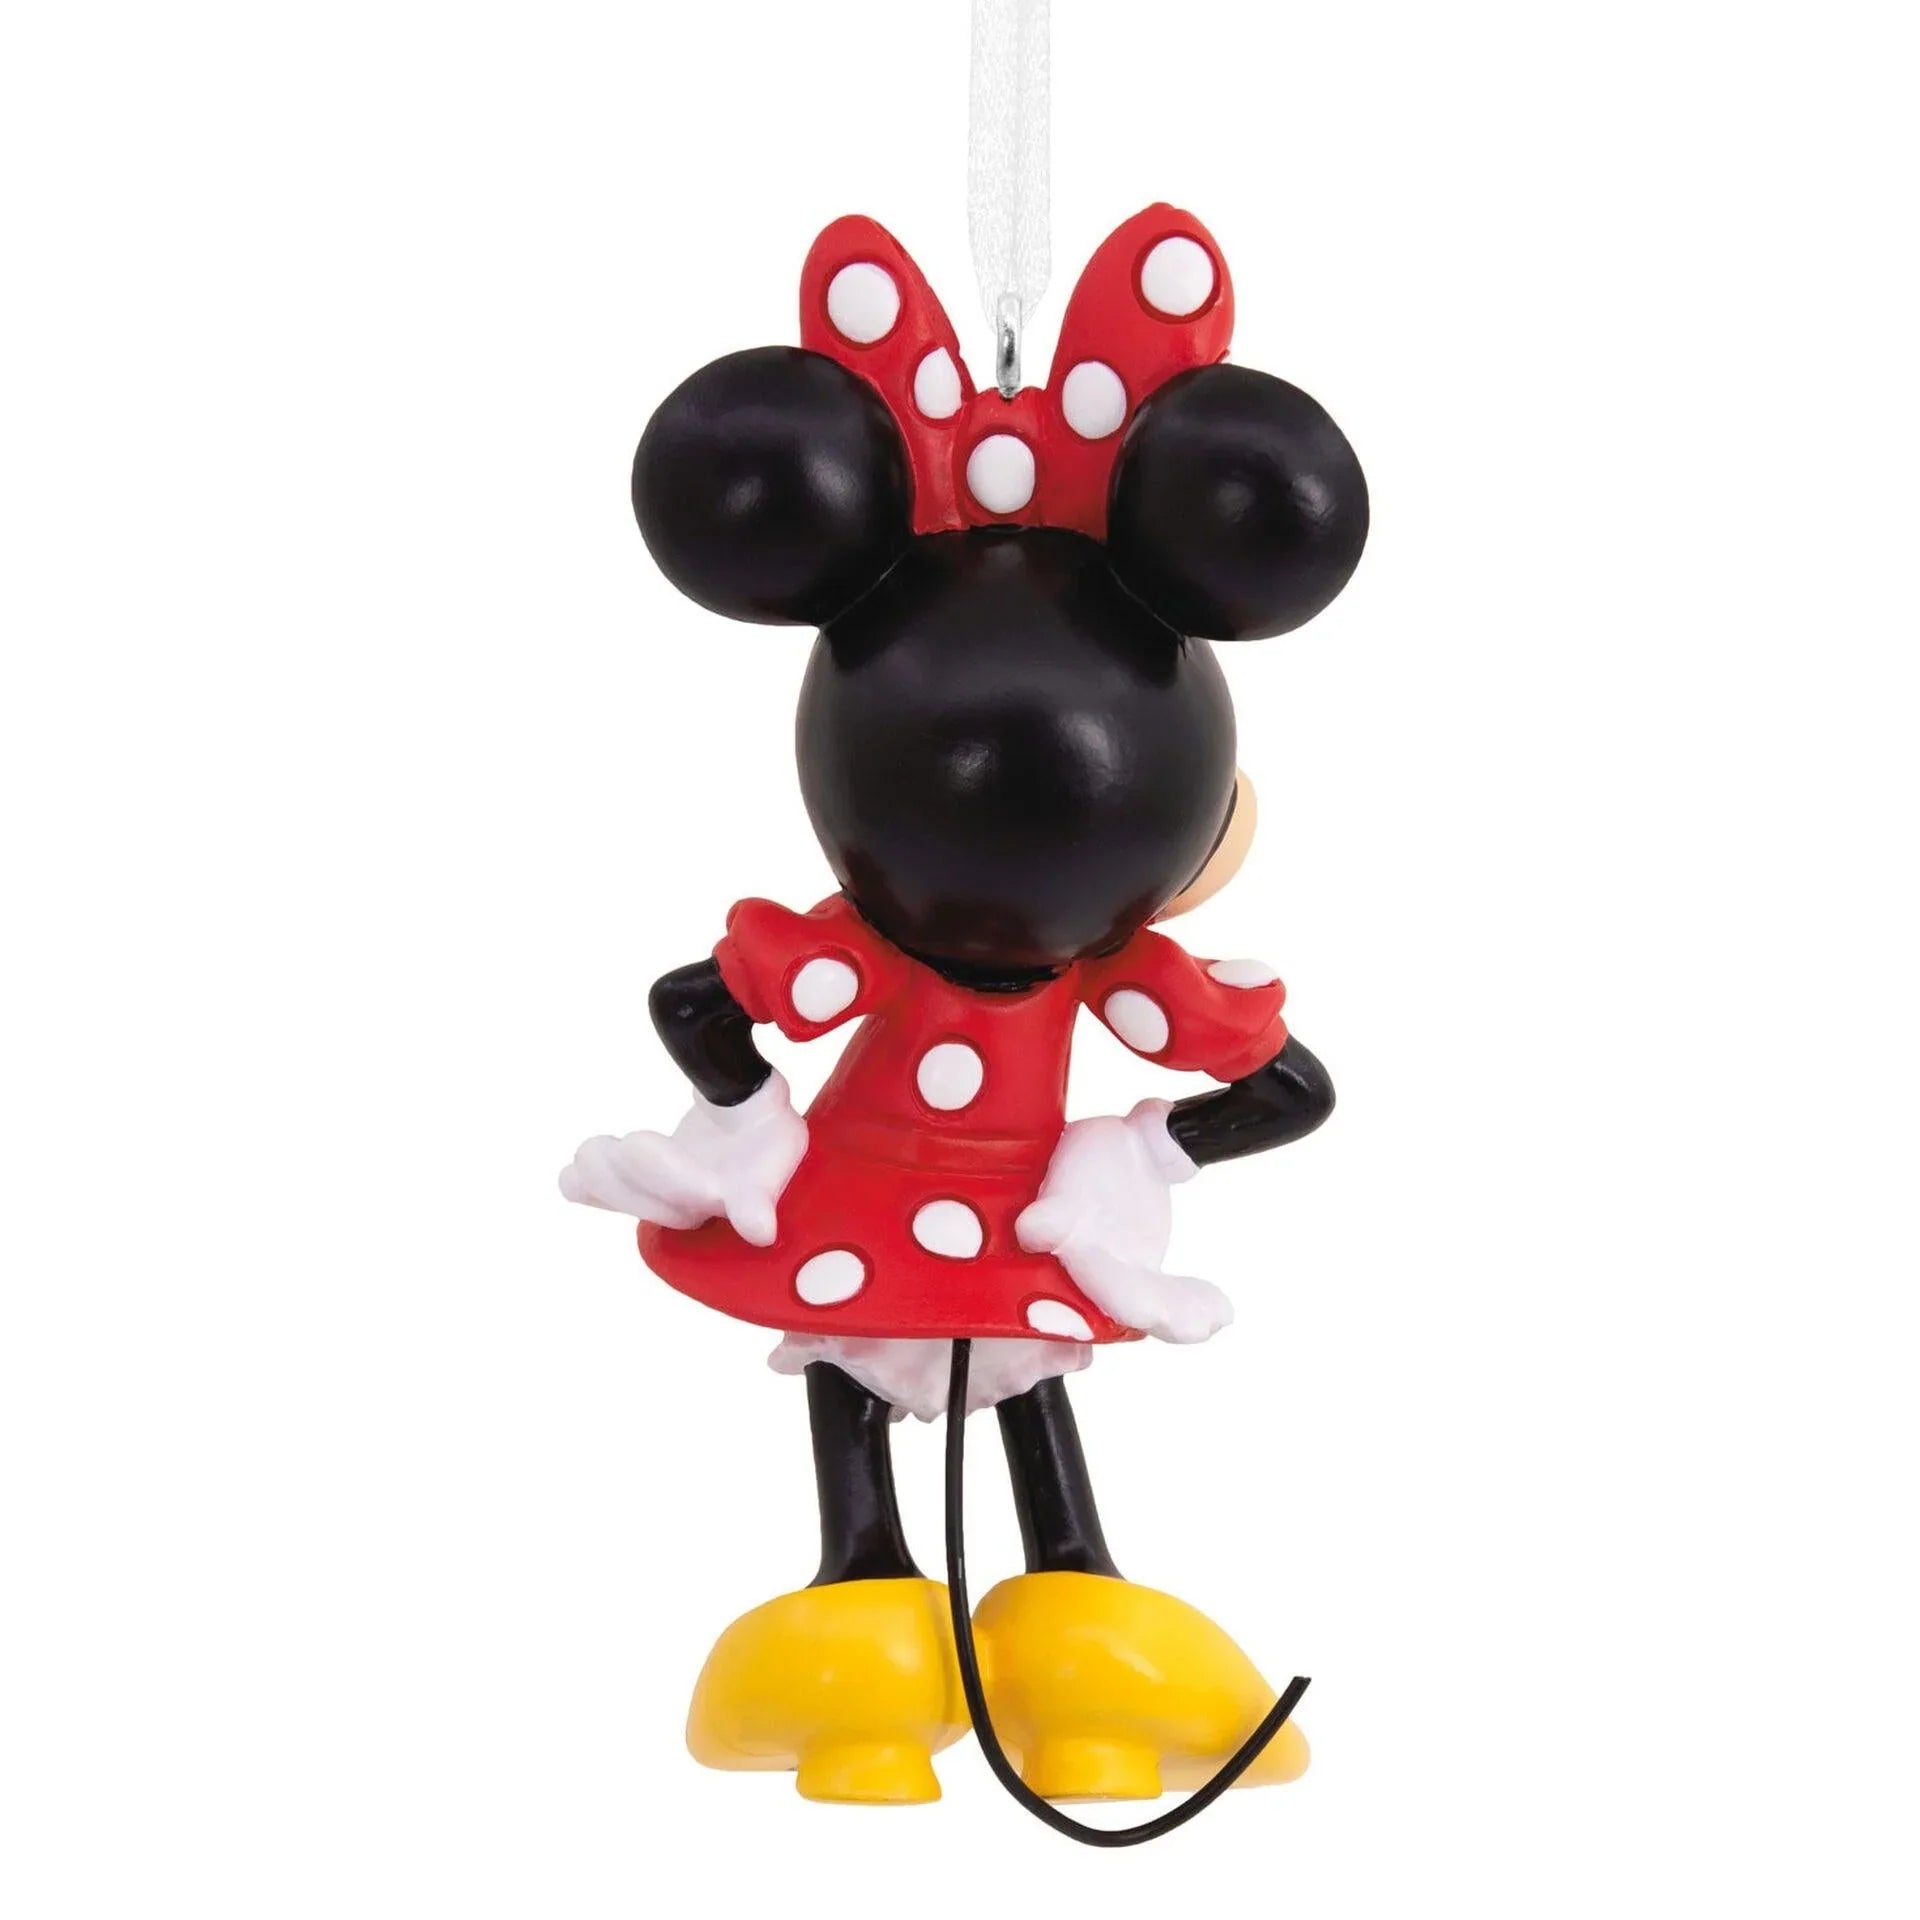 Disney Designer Fanny Pack - Minnie Mouse - Polka Dots